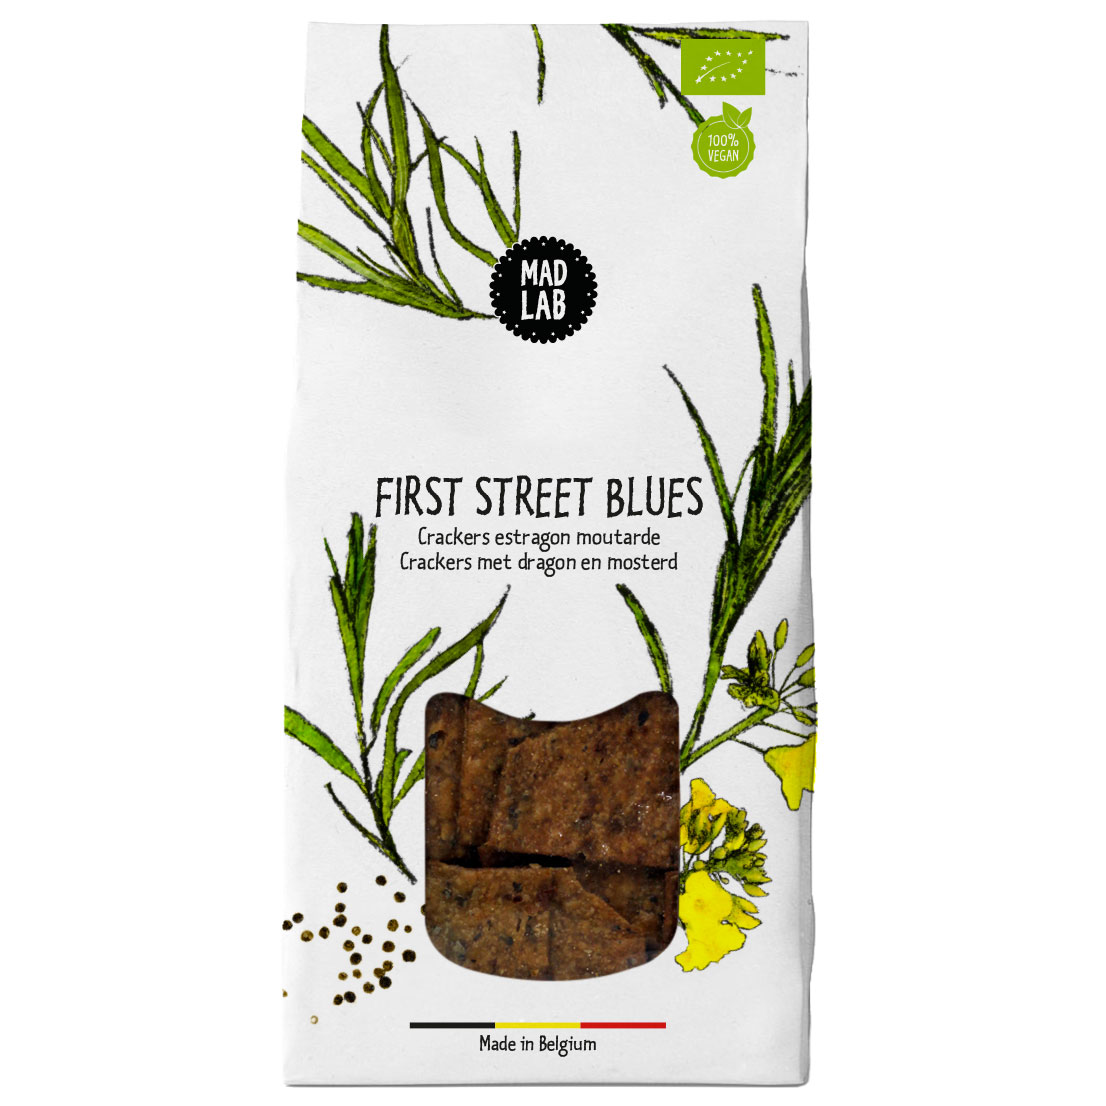 FirstStreetBlues-mad-lab-produit